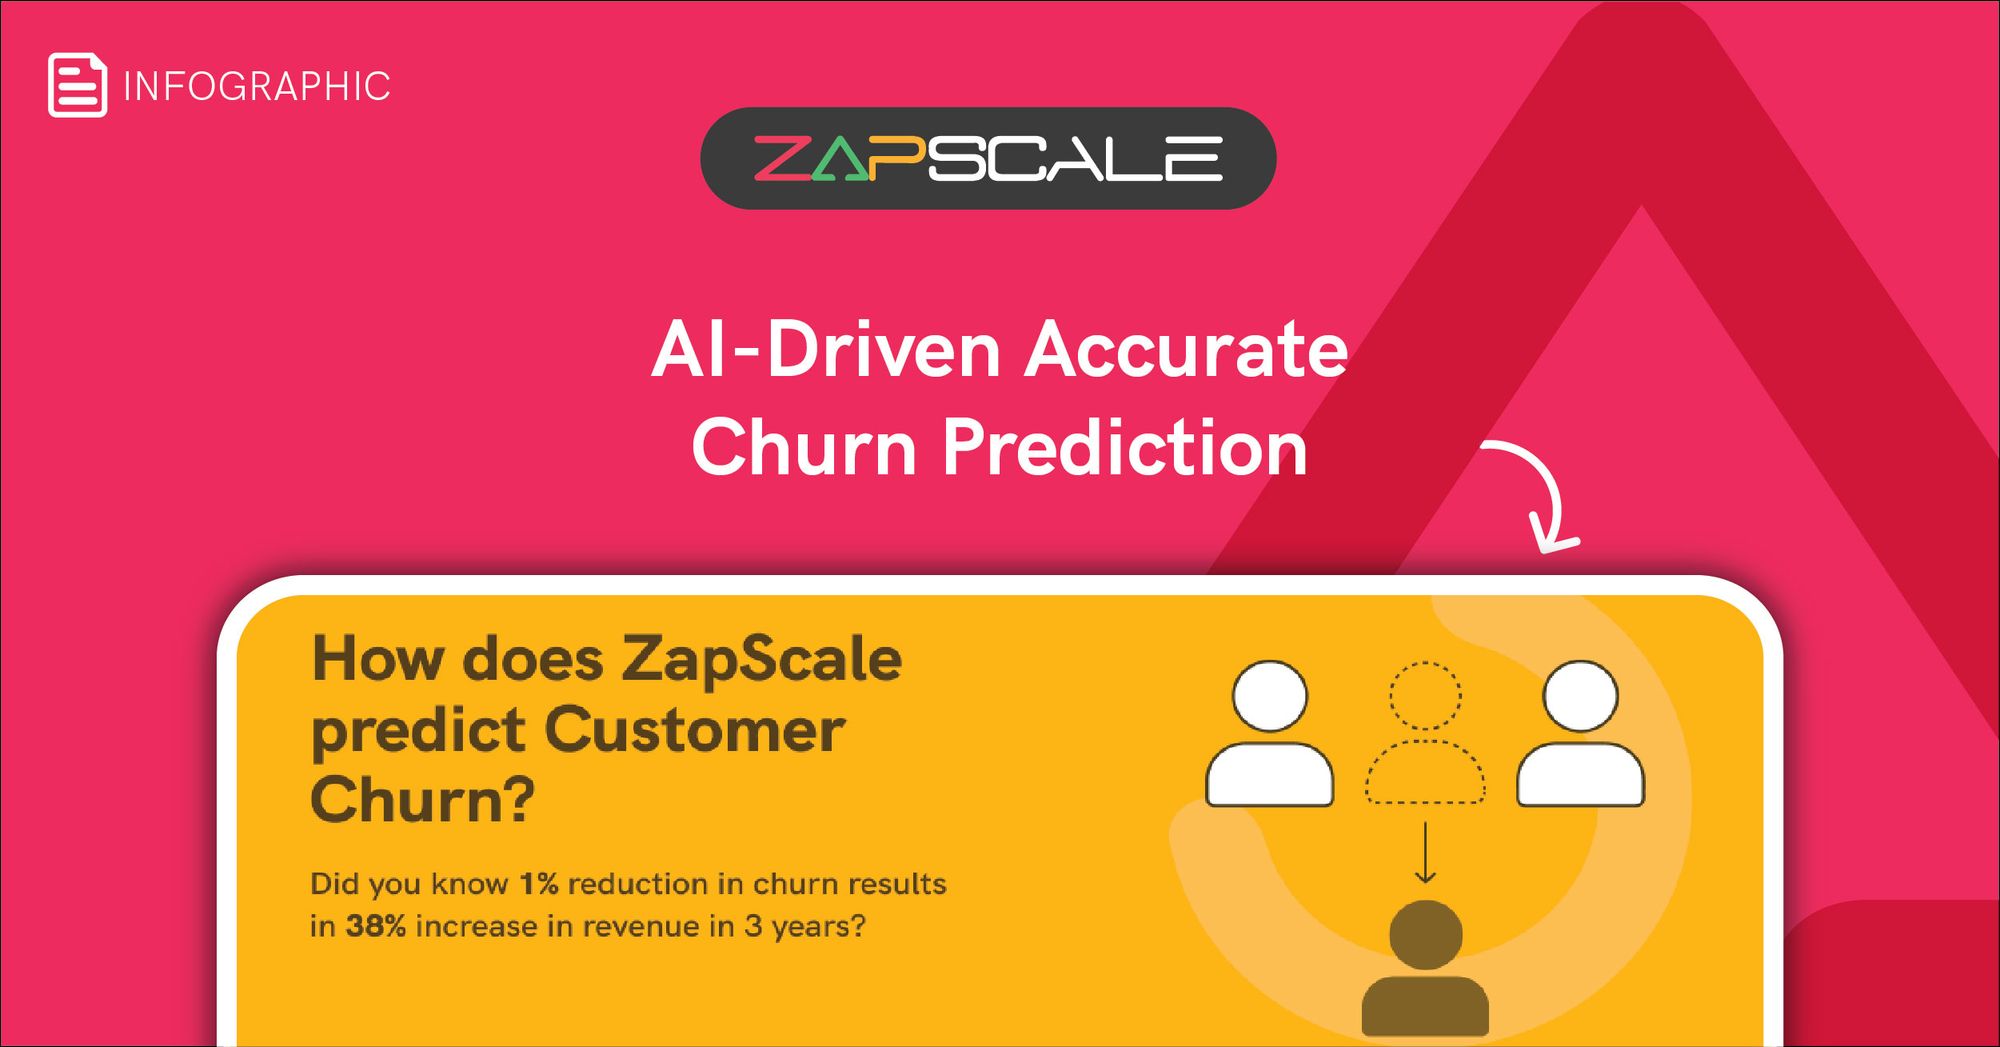 How does ZapScale predict Churn?